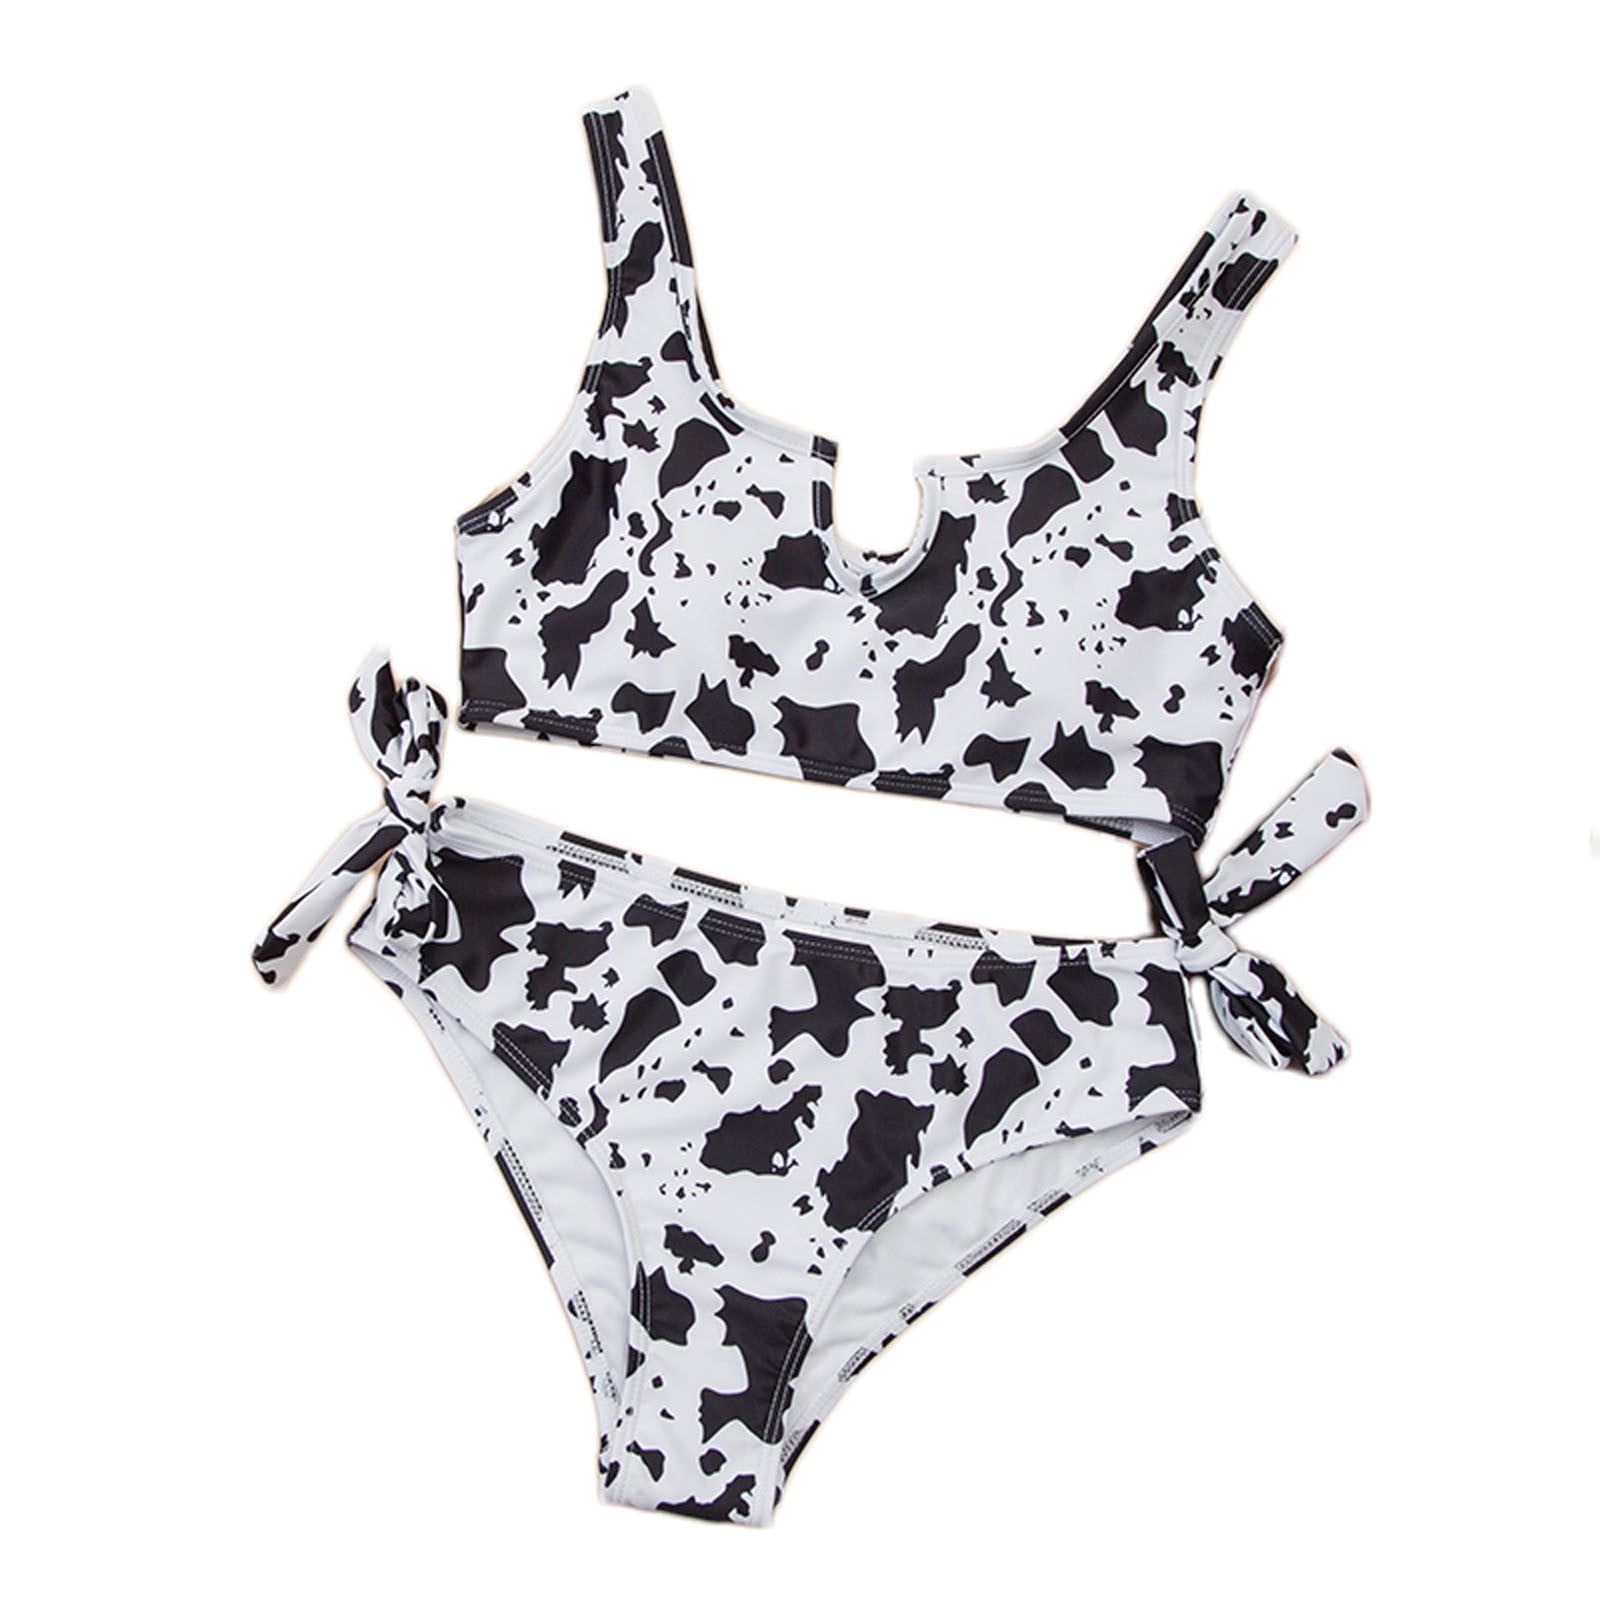 Jikolililili Girls Swimsuit Two Piece Bikini Set Crop Top with